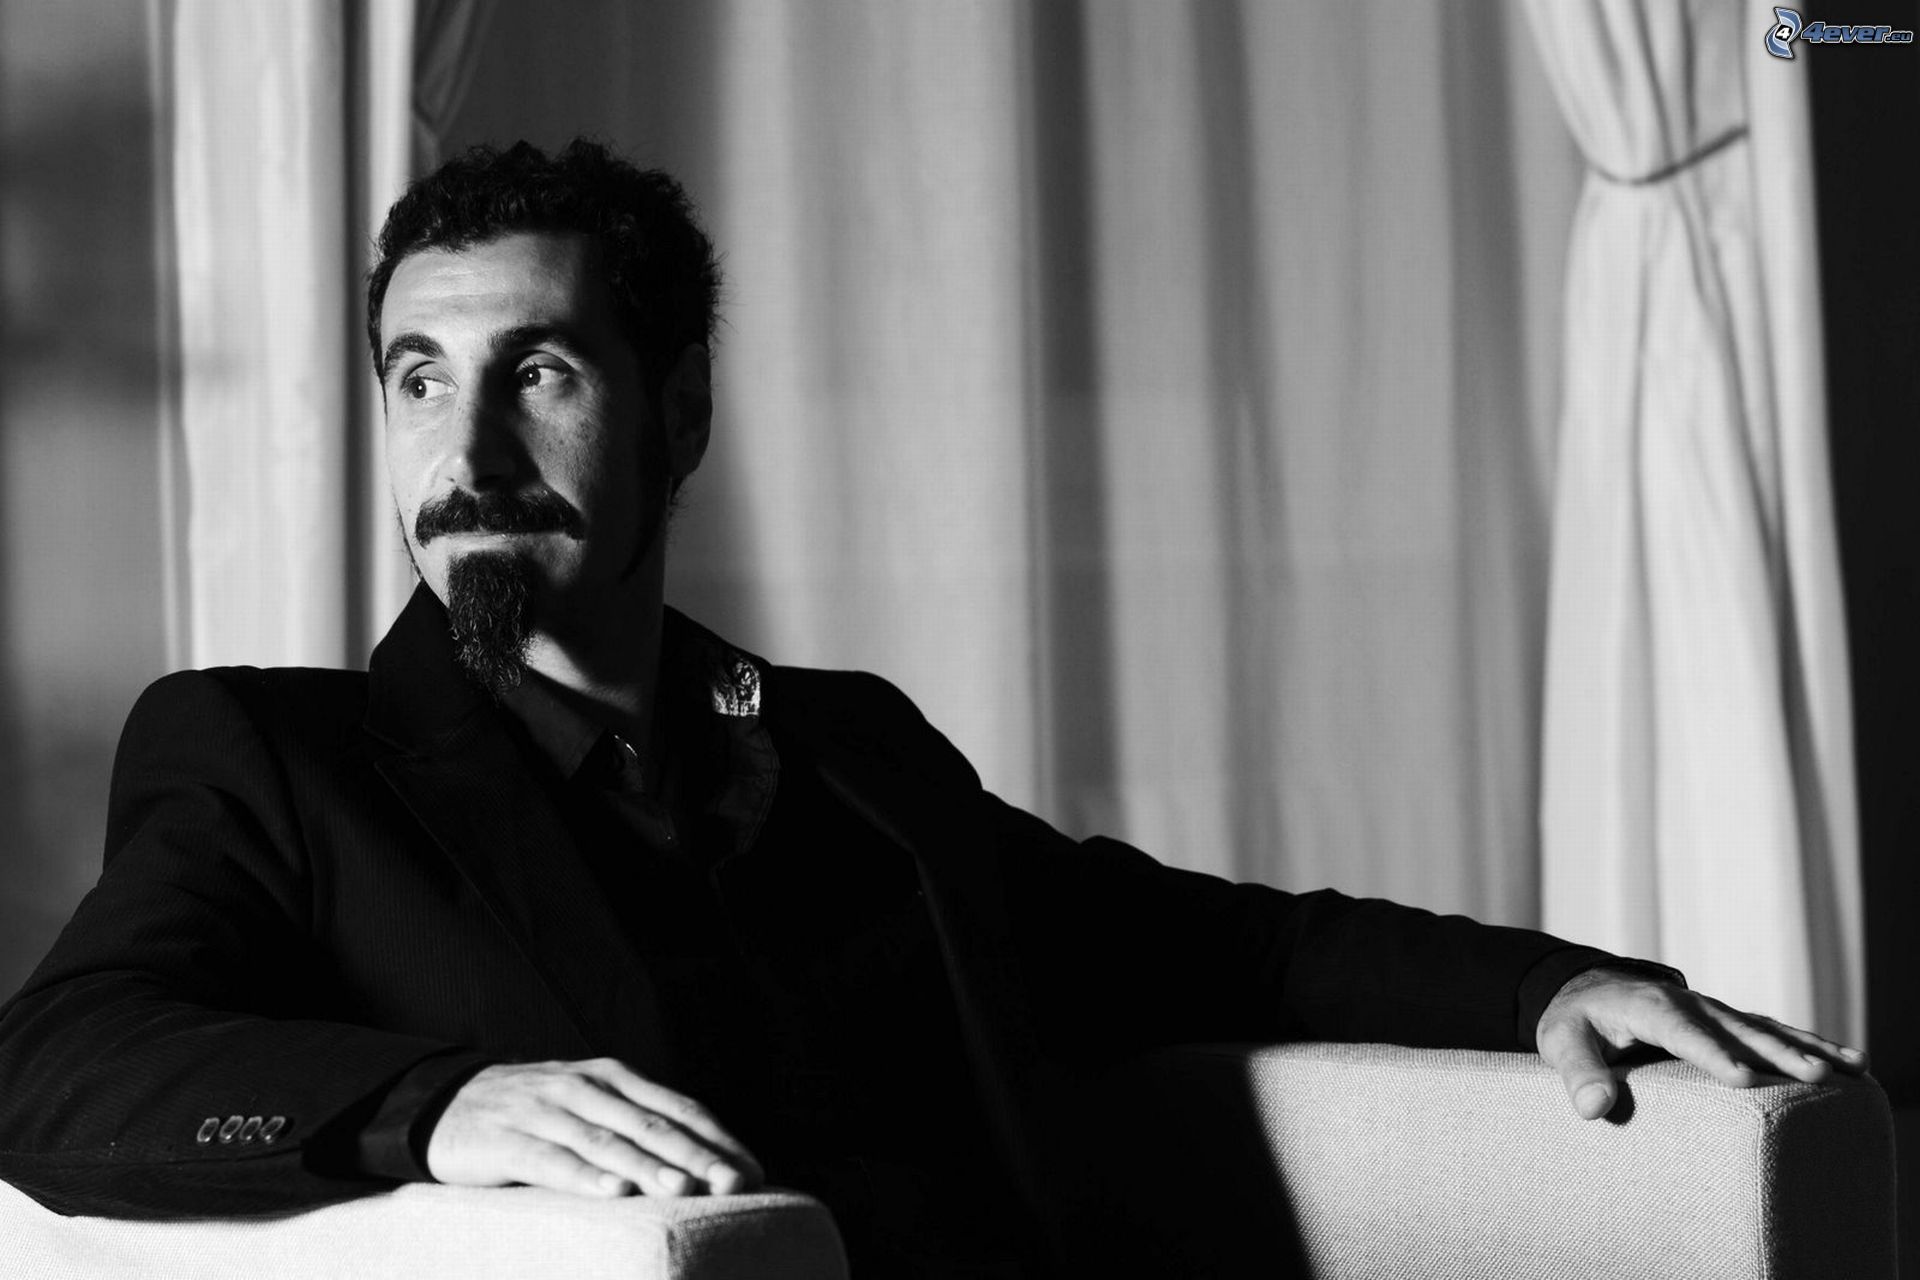 Serj Tankian le rinde tributo a Chris Cornell con el resto de Audioslave